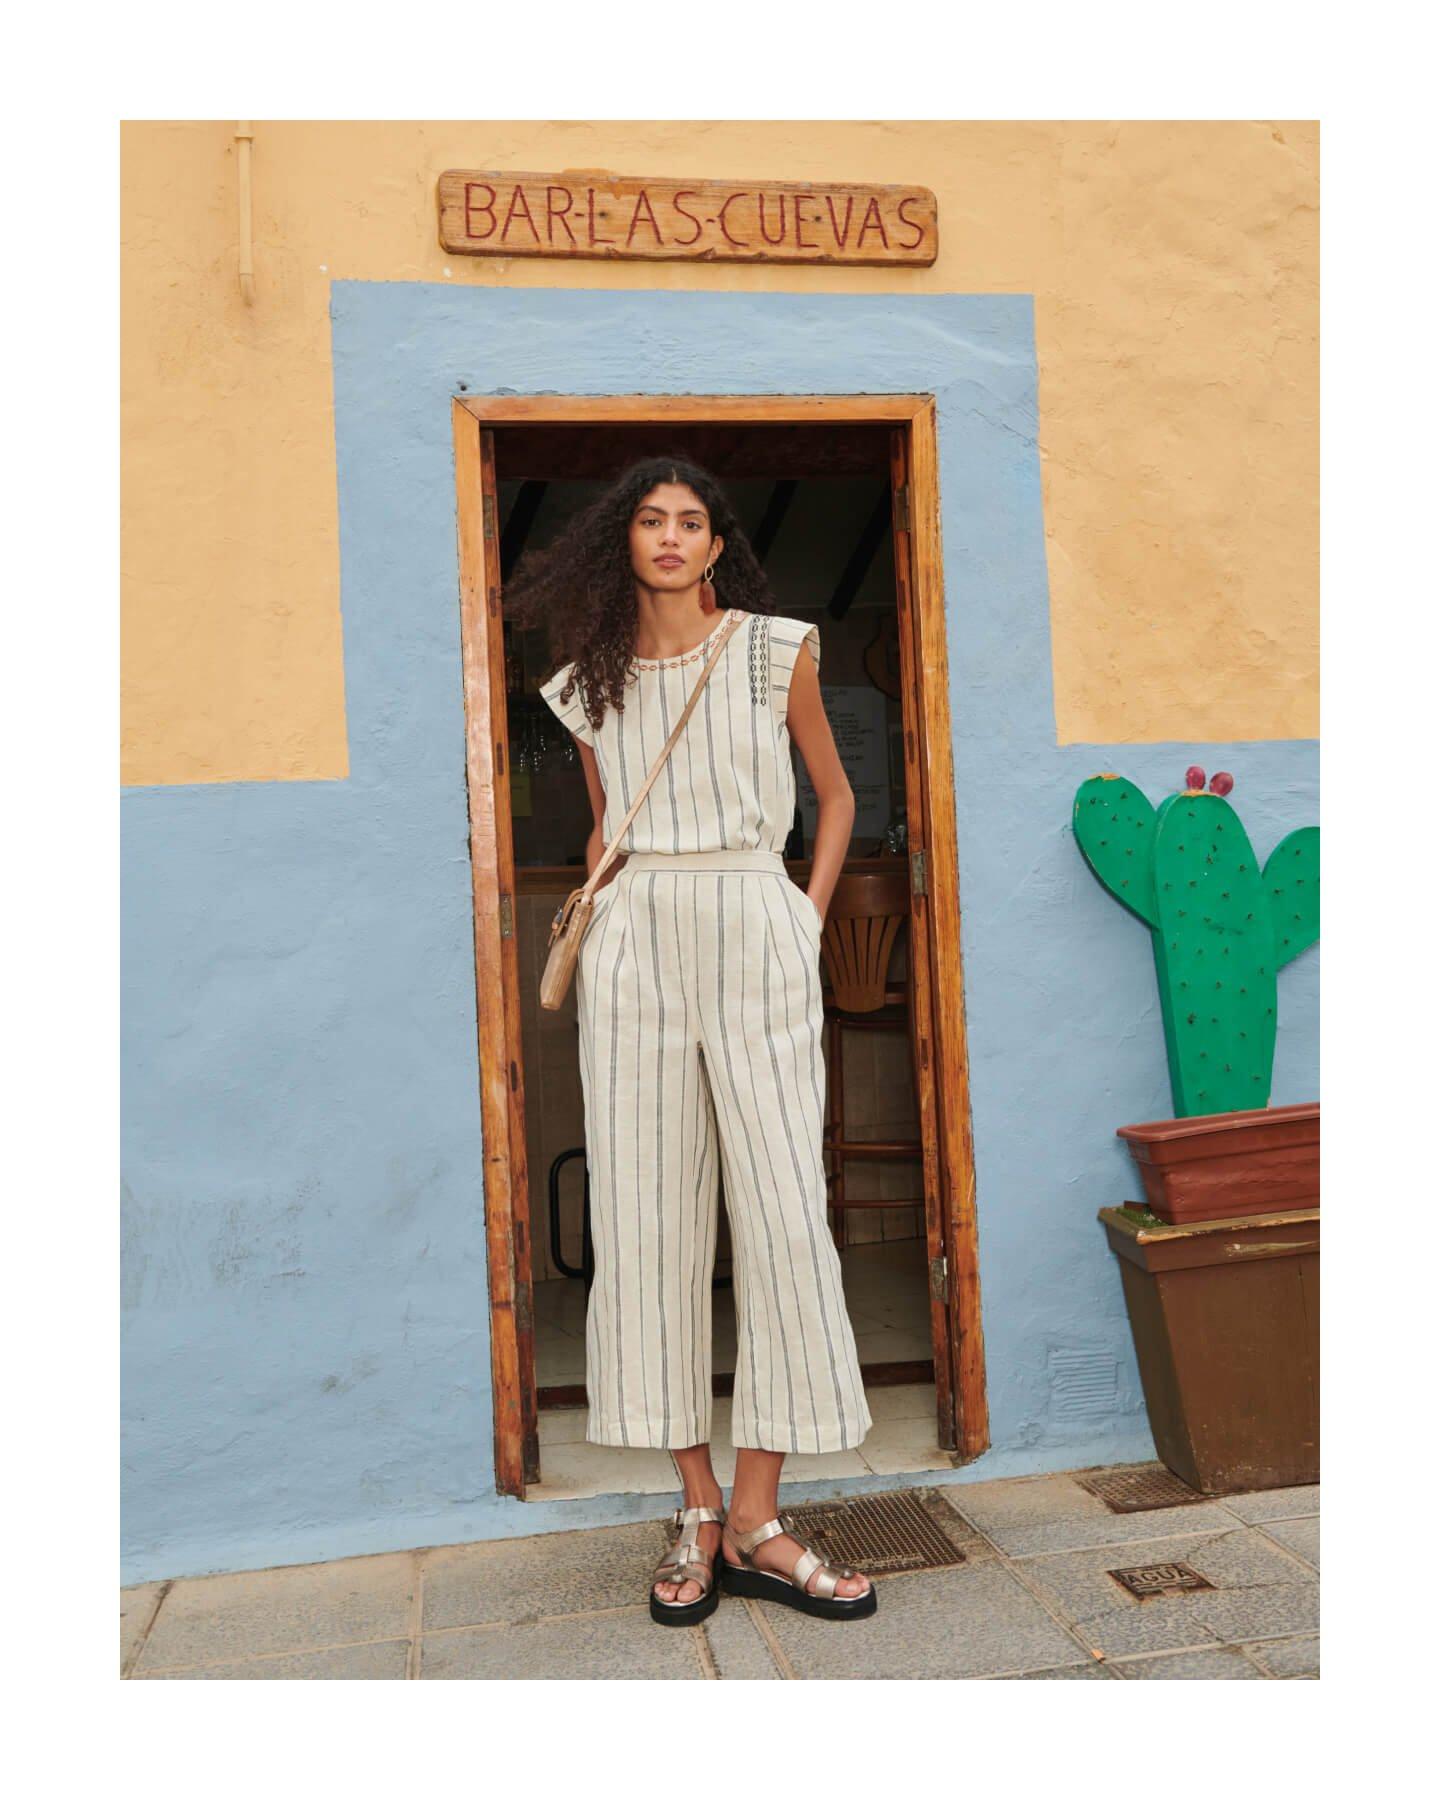 Woman wearing coordinated linen top and trousers standing in doorway